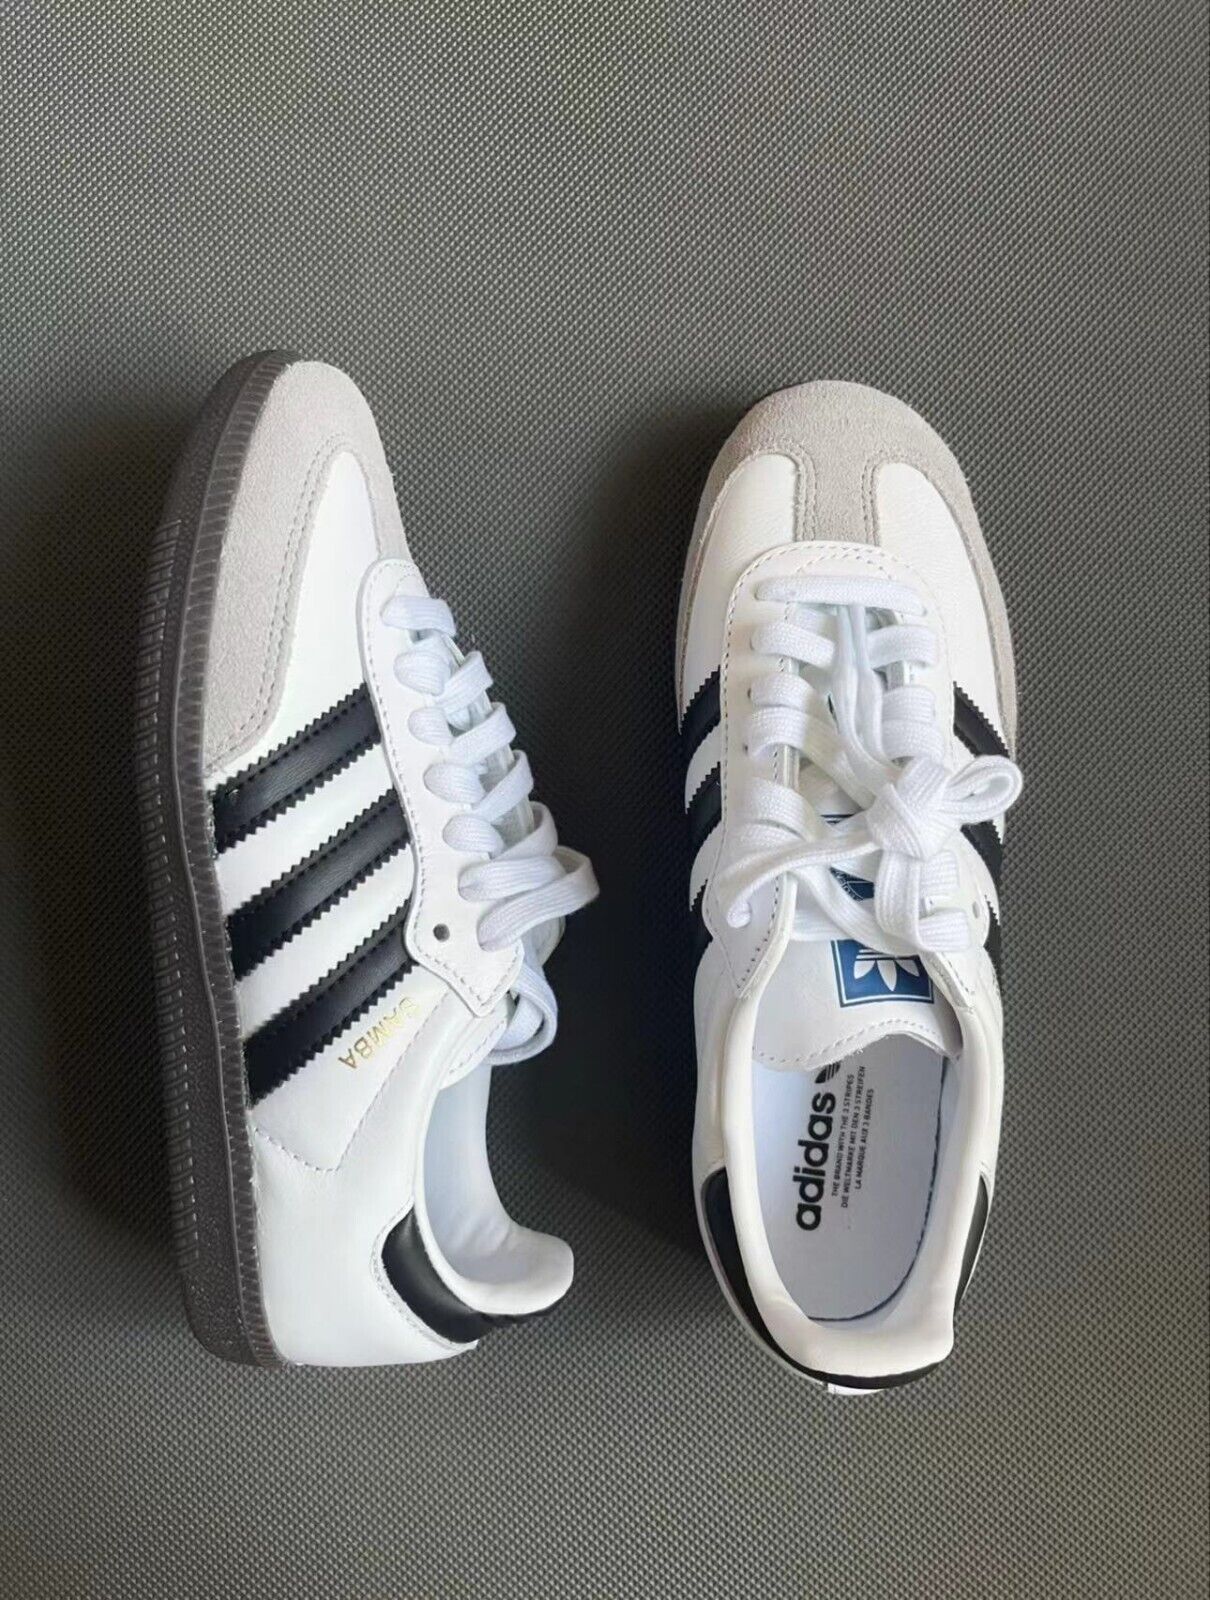 adidas originals samba OG Board shoes men and women black and white gray